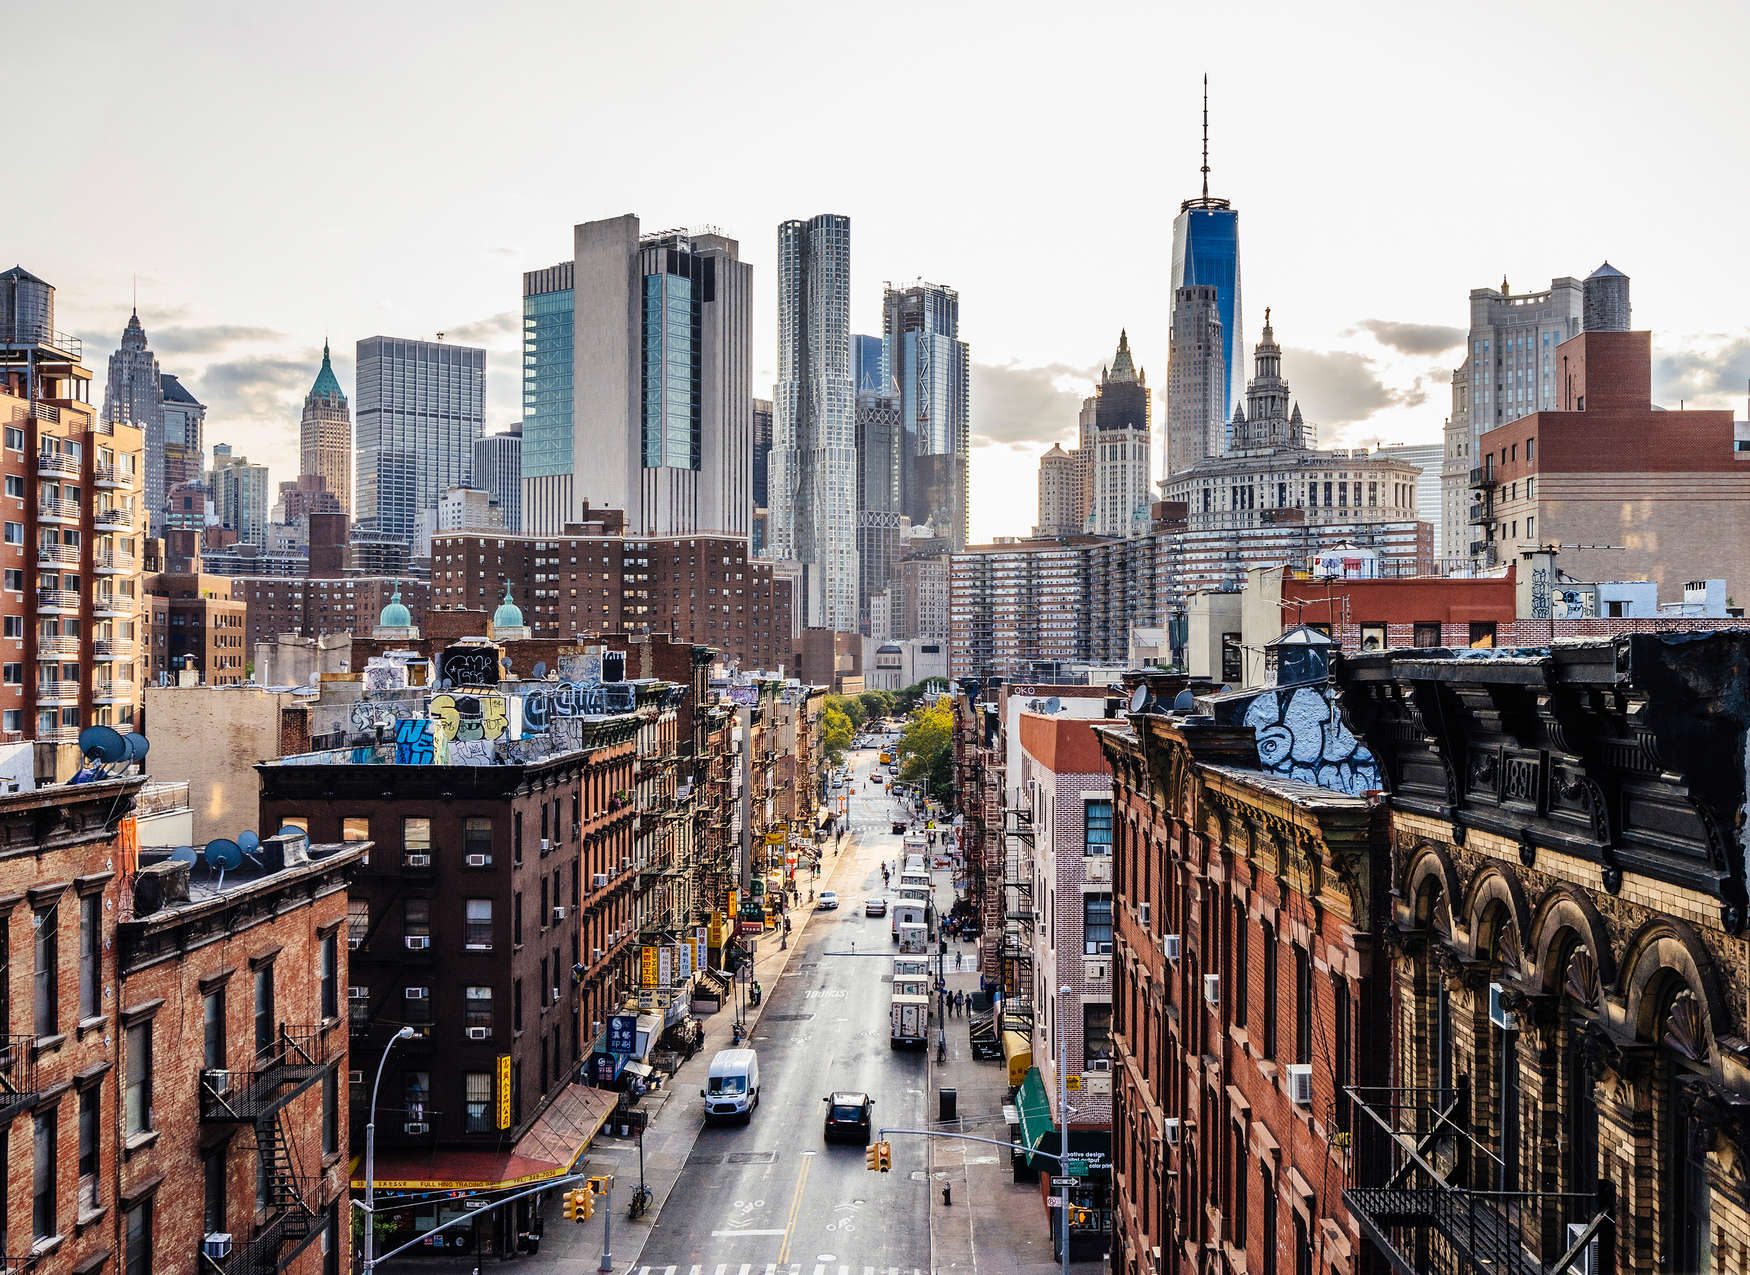             Carta da parati New York con skyline - Marrone, grigio, bianco
        